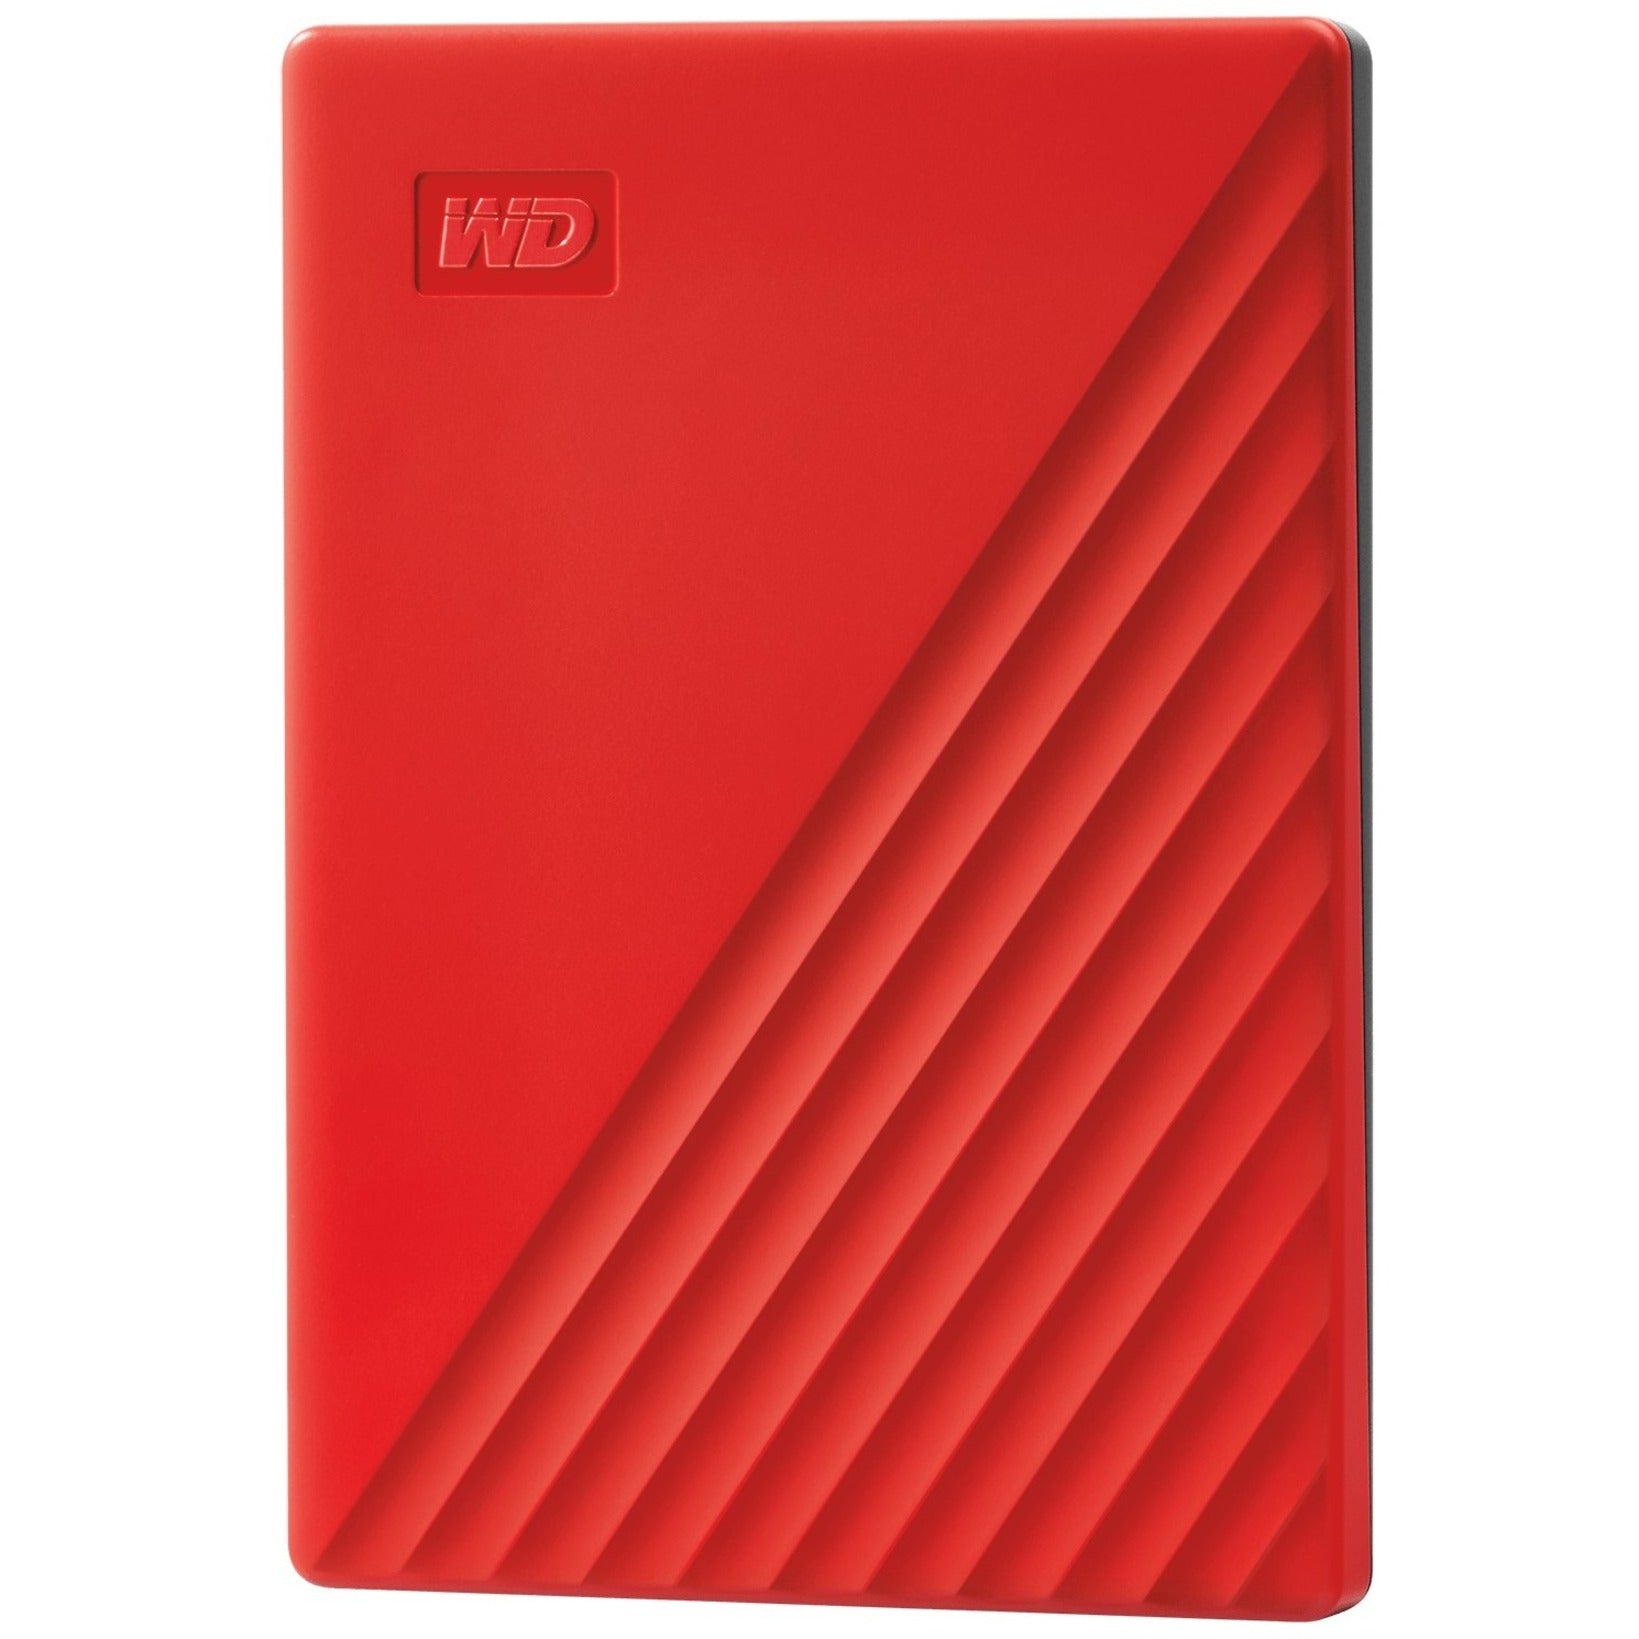 WD WDBYVG0020BRD-WESN 2TB My Passport Portable Hard Drive, USB 3.0, 3-Year Warranty